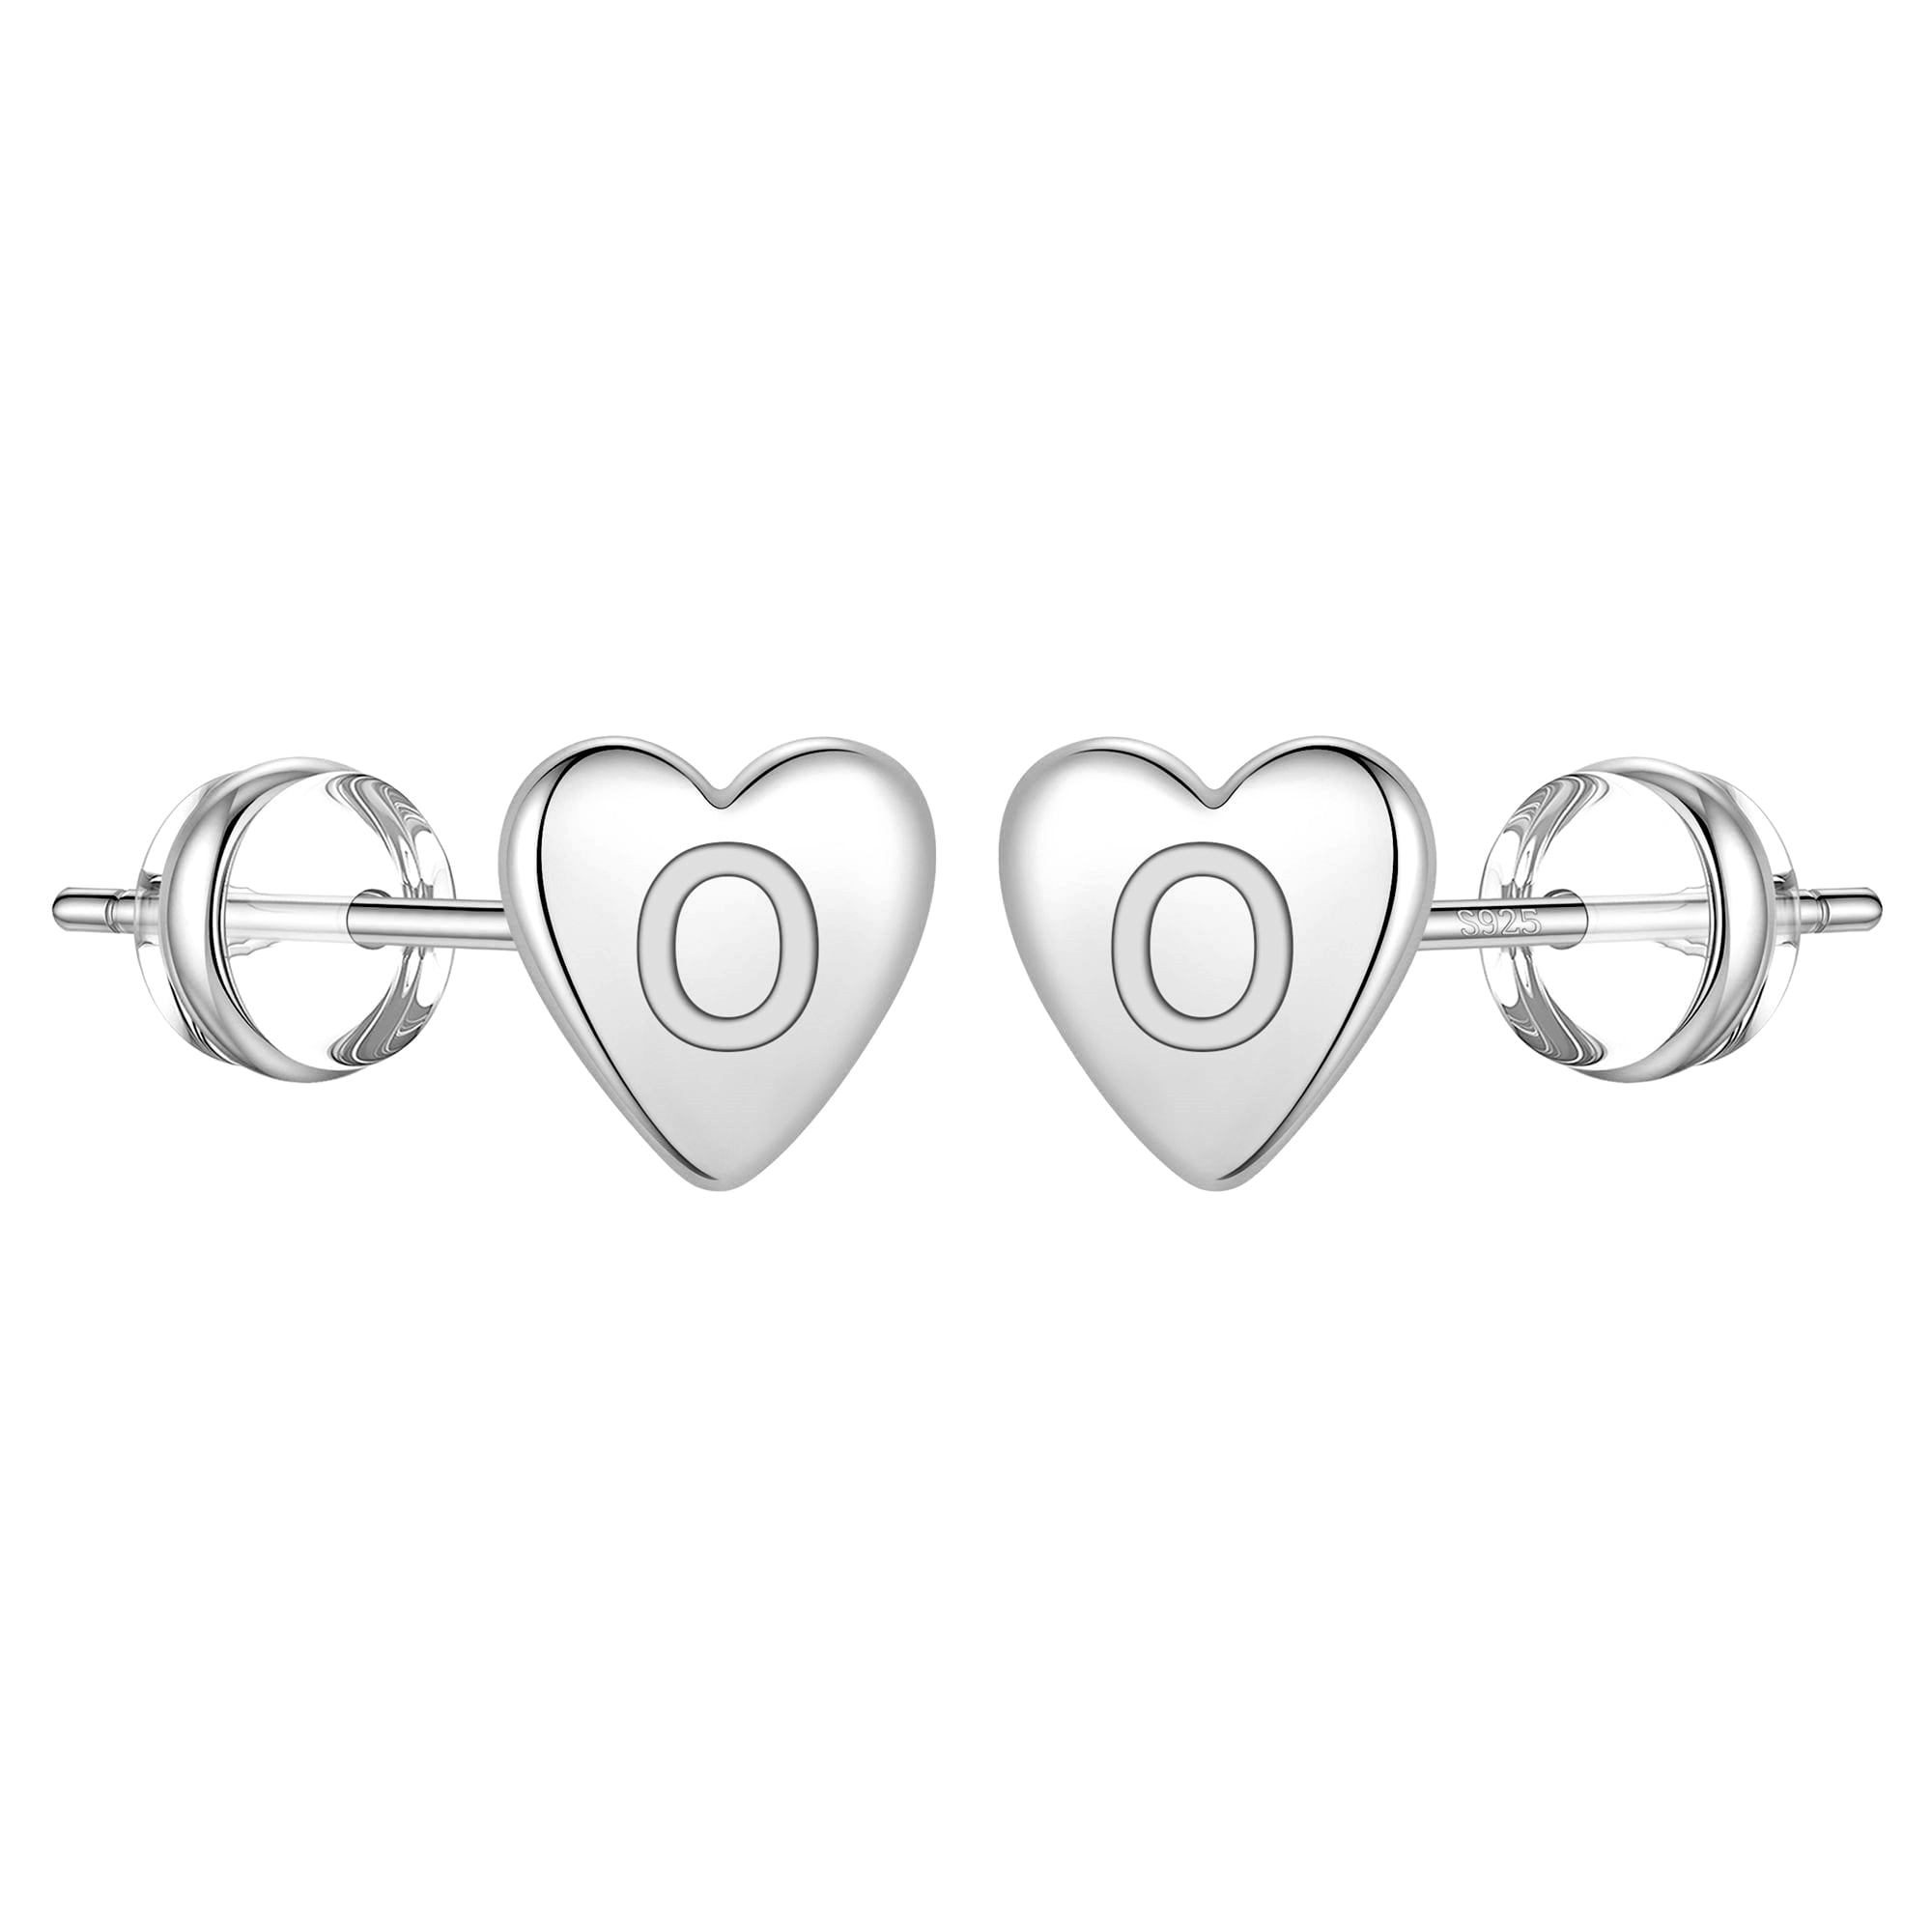 AUNOOL Initial Bracelets for Women Girls S925 Sterling Silver